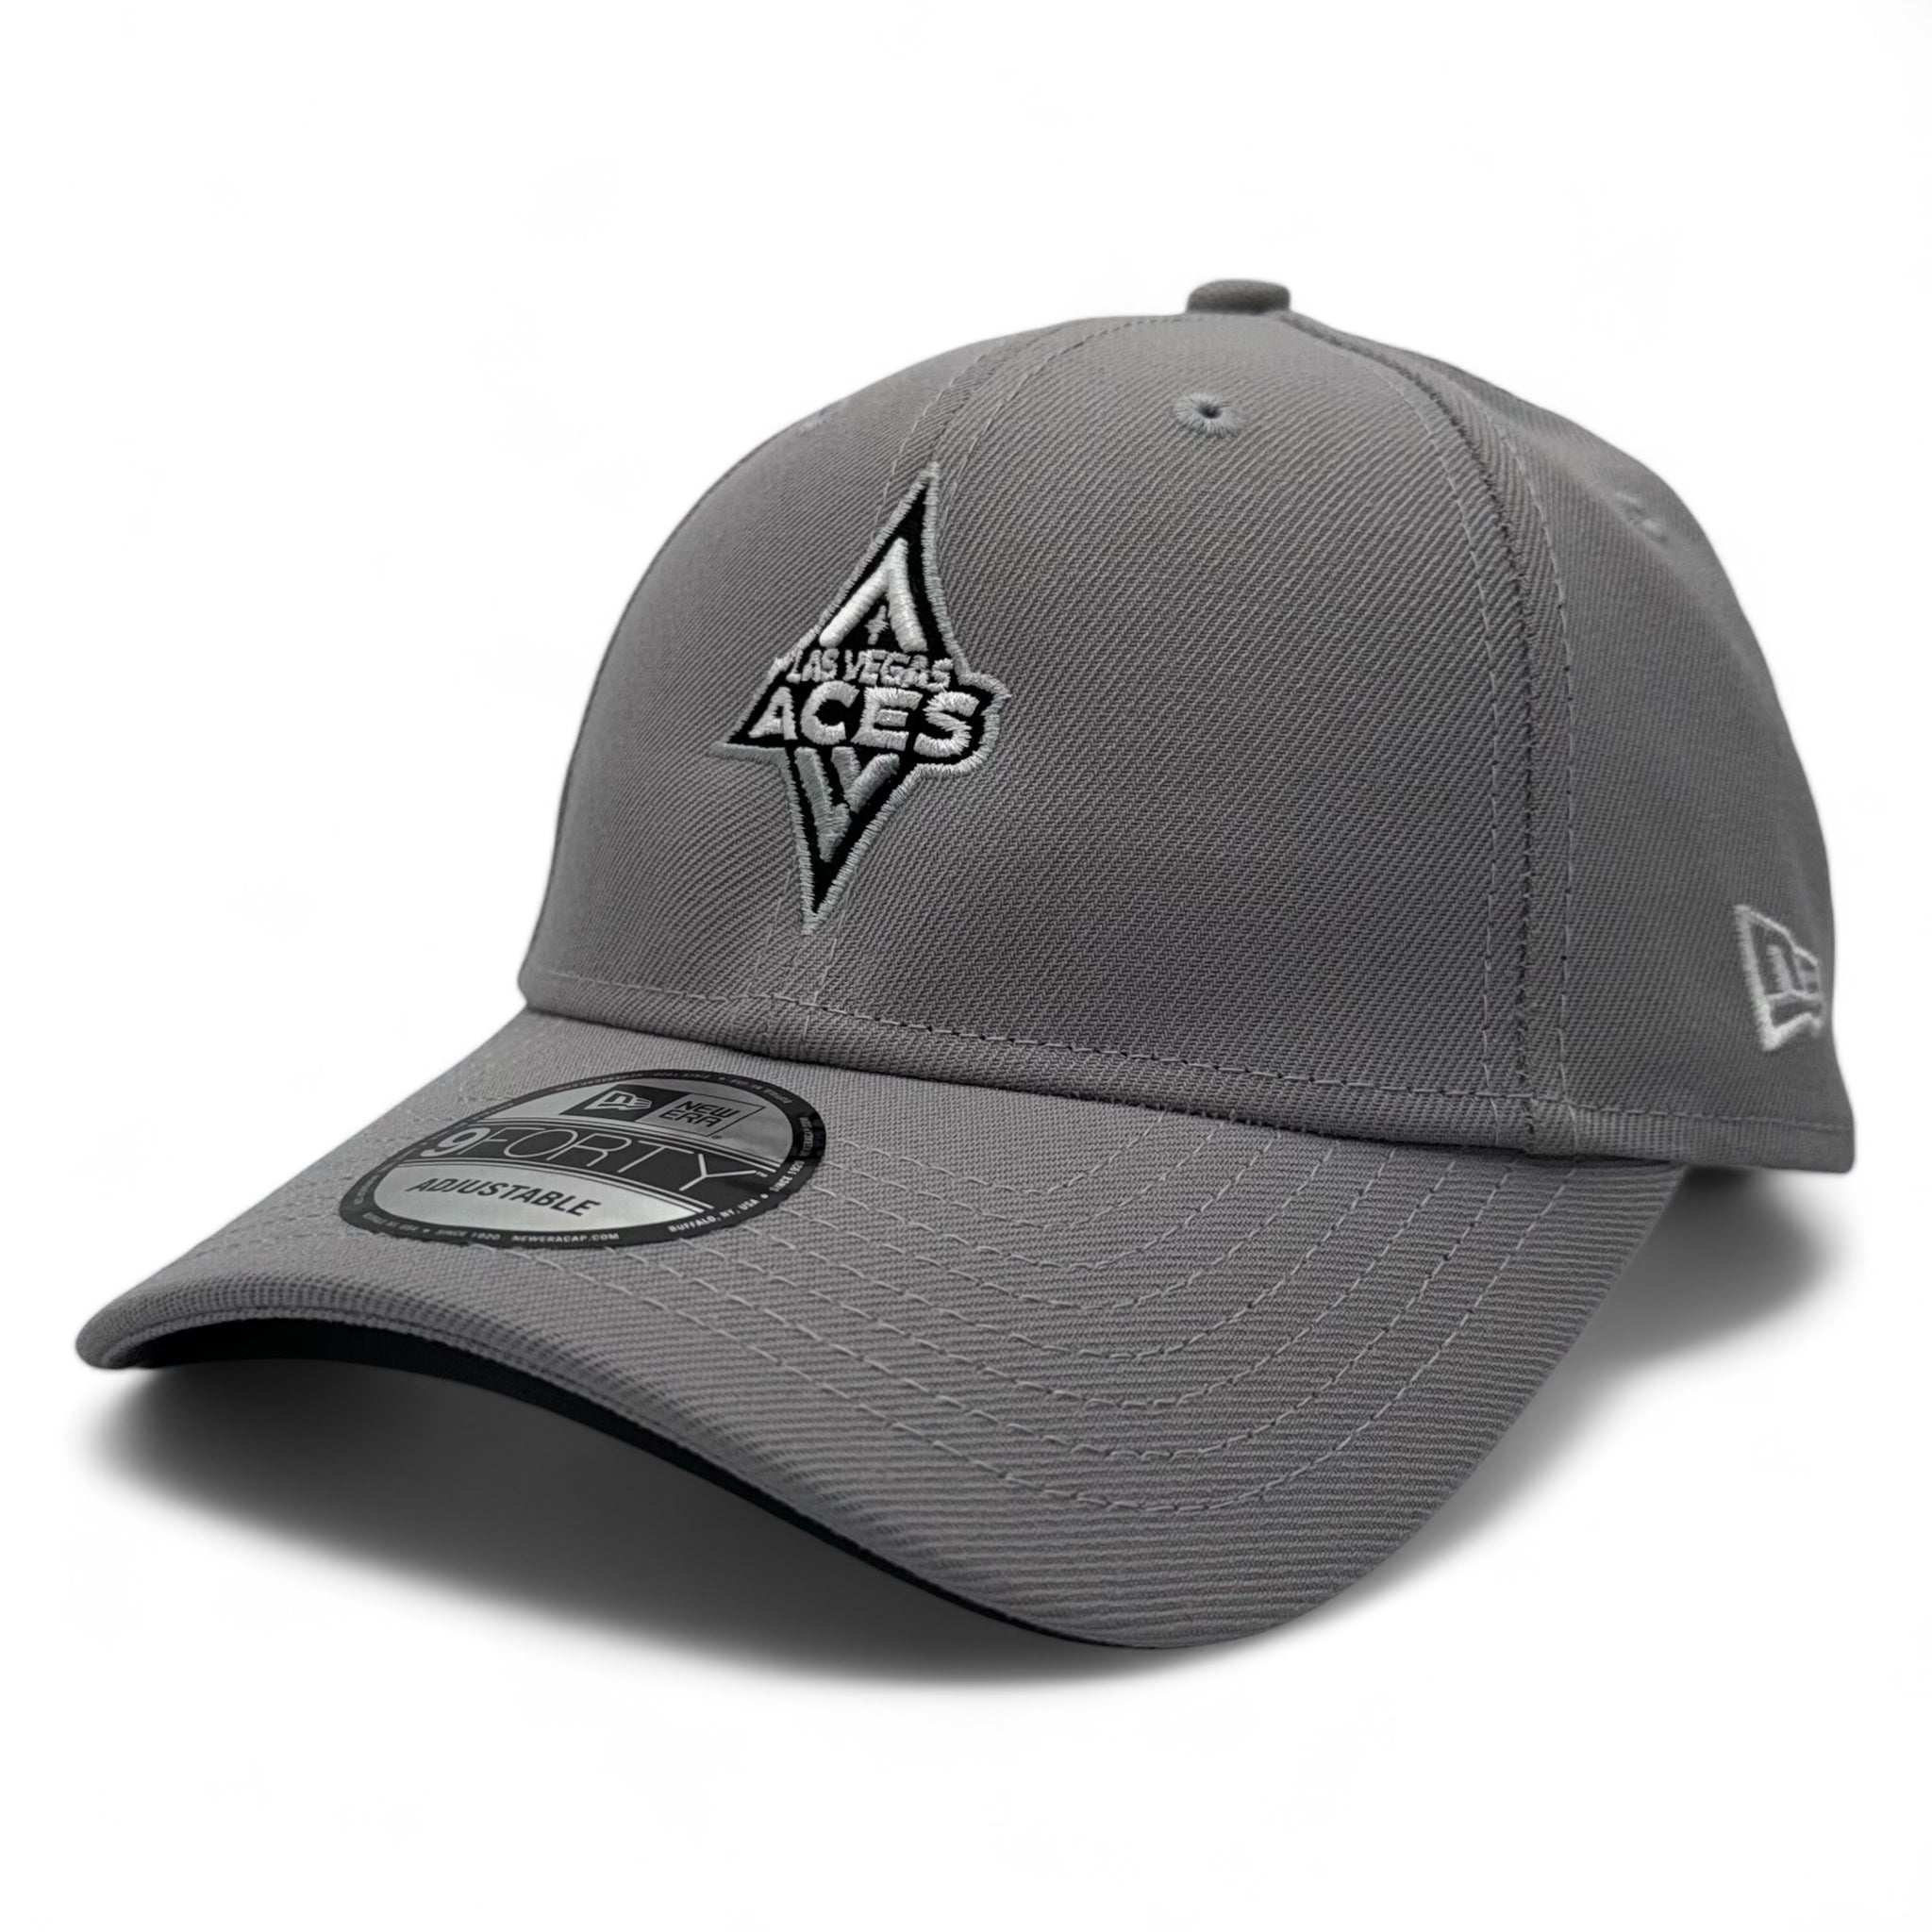 Las Vegas Aces Wordmark 9forty Adjustable Hat - Grey